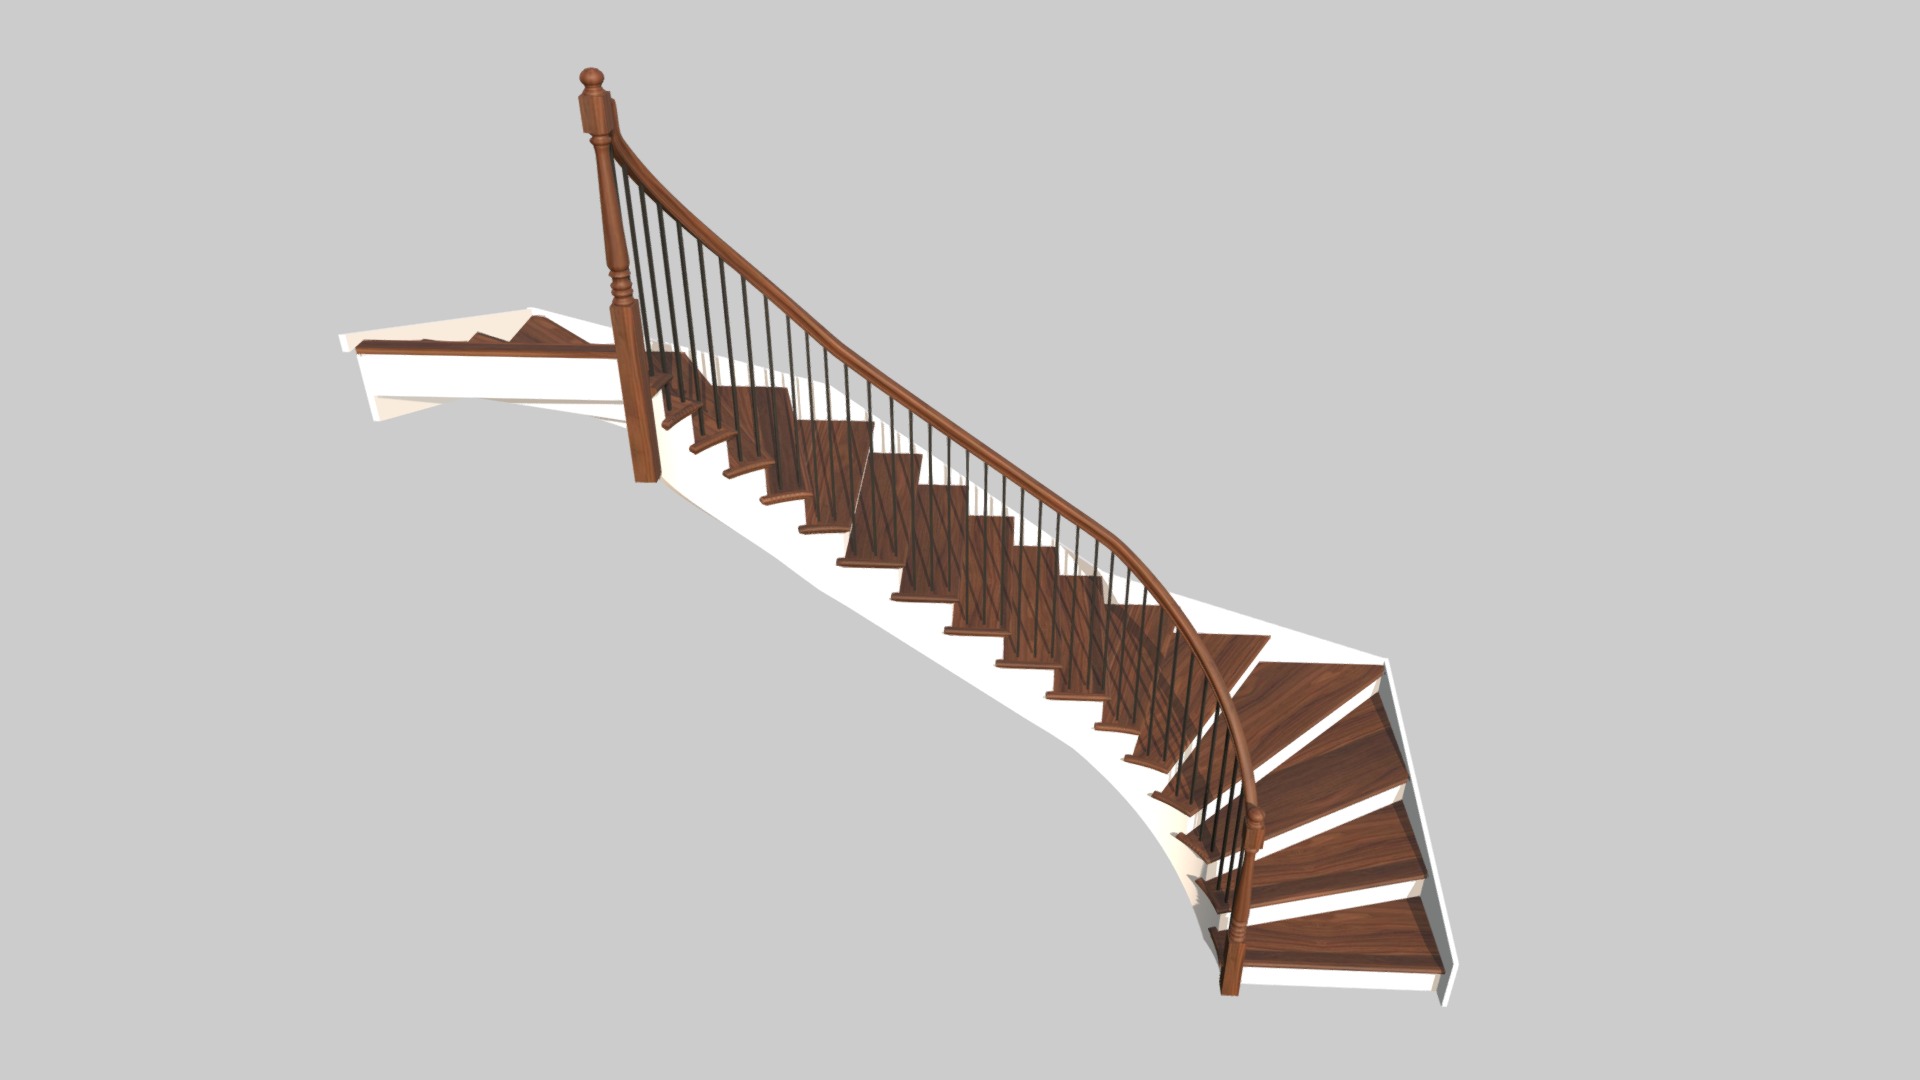 Circular stair - "U" shape with square corners